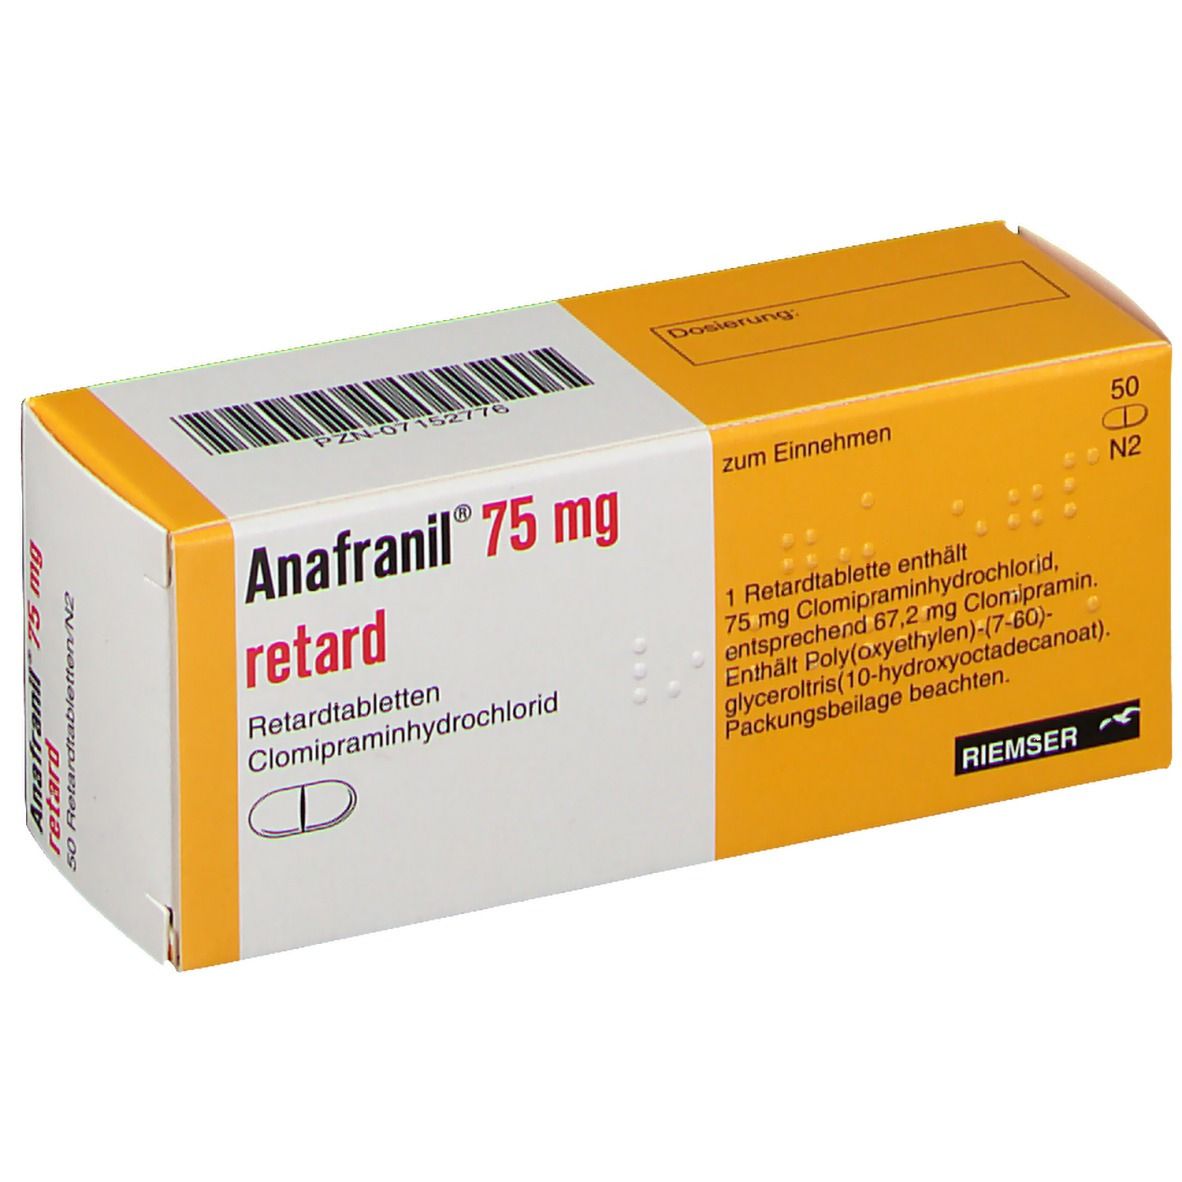 Anafranil® 75 mg 50 St - shop-apotheke.com